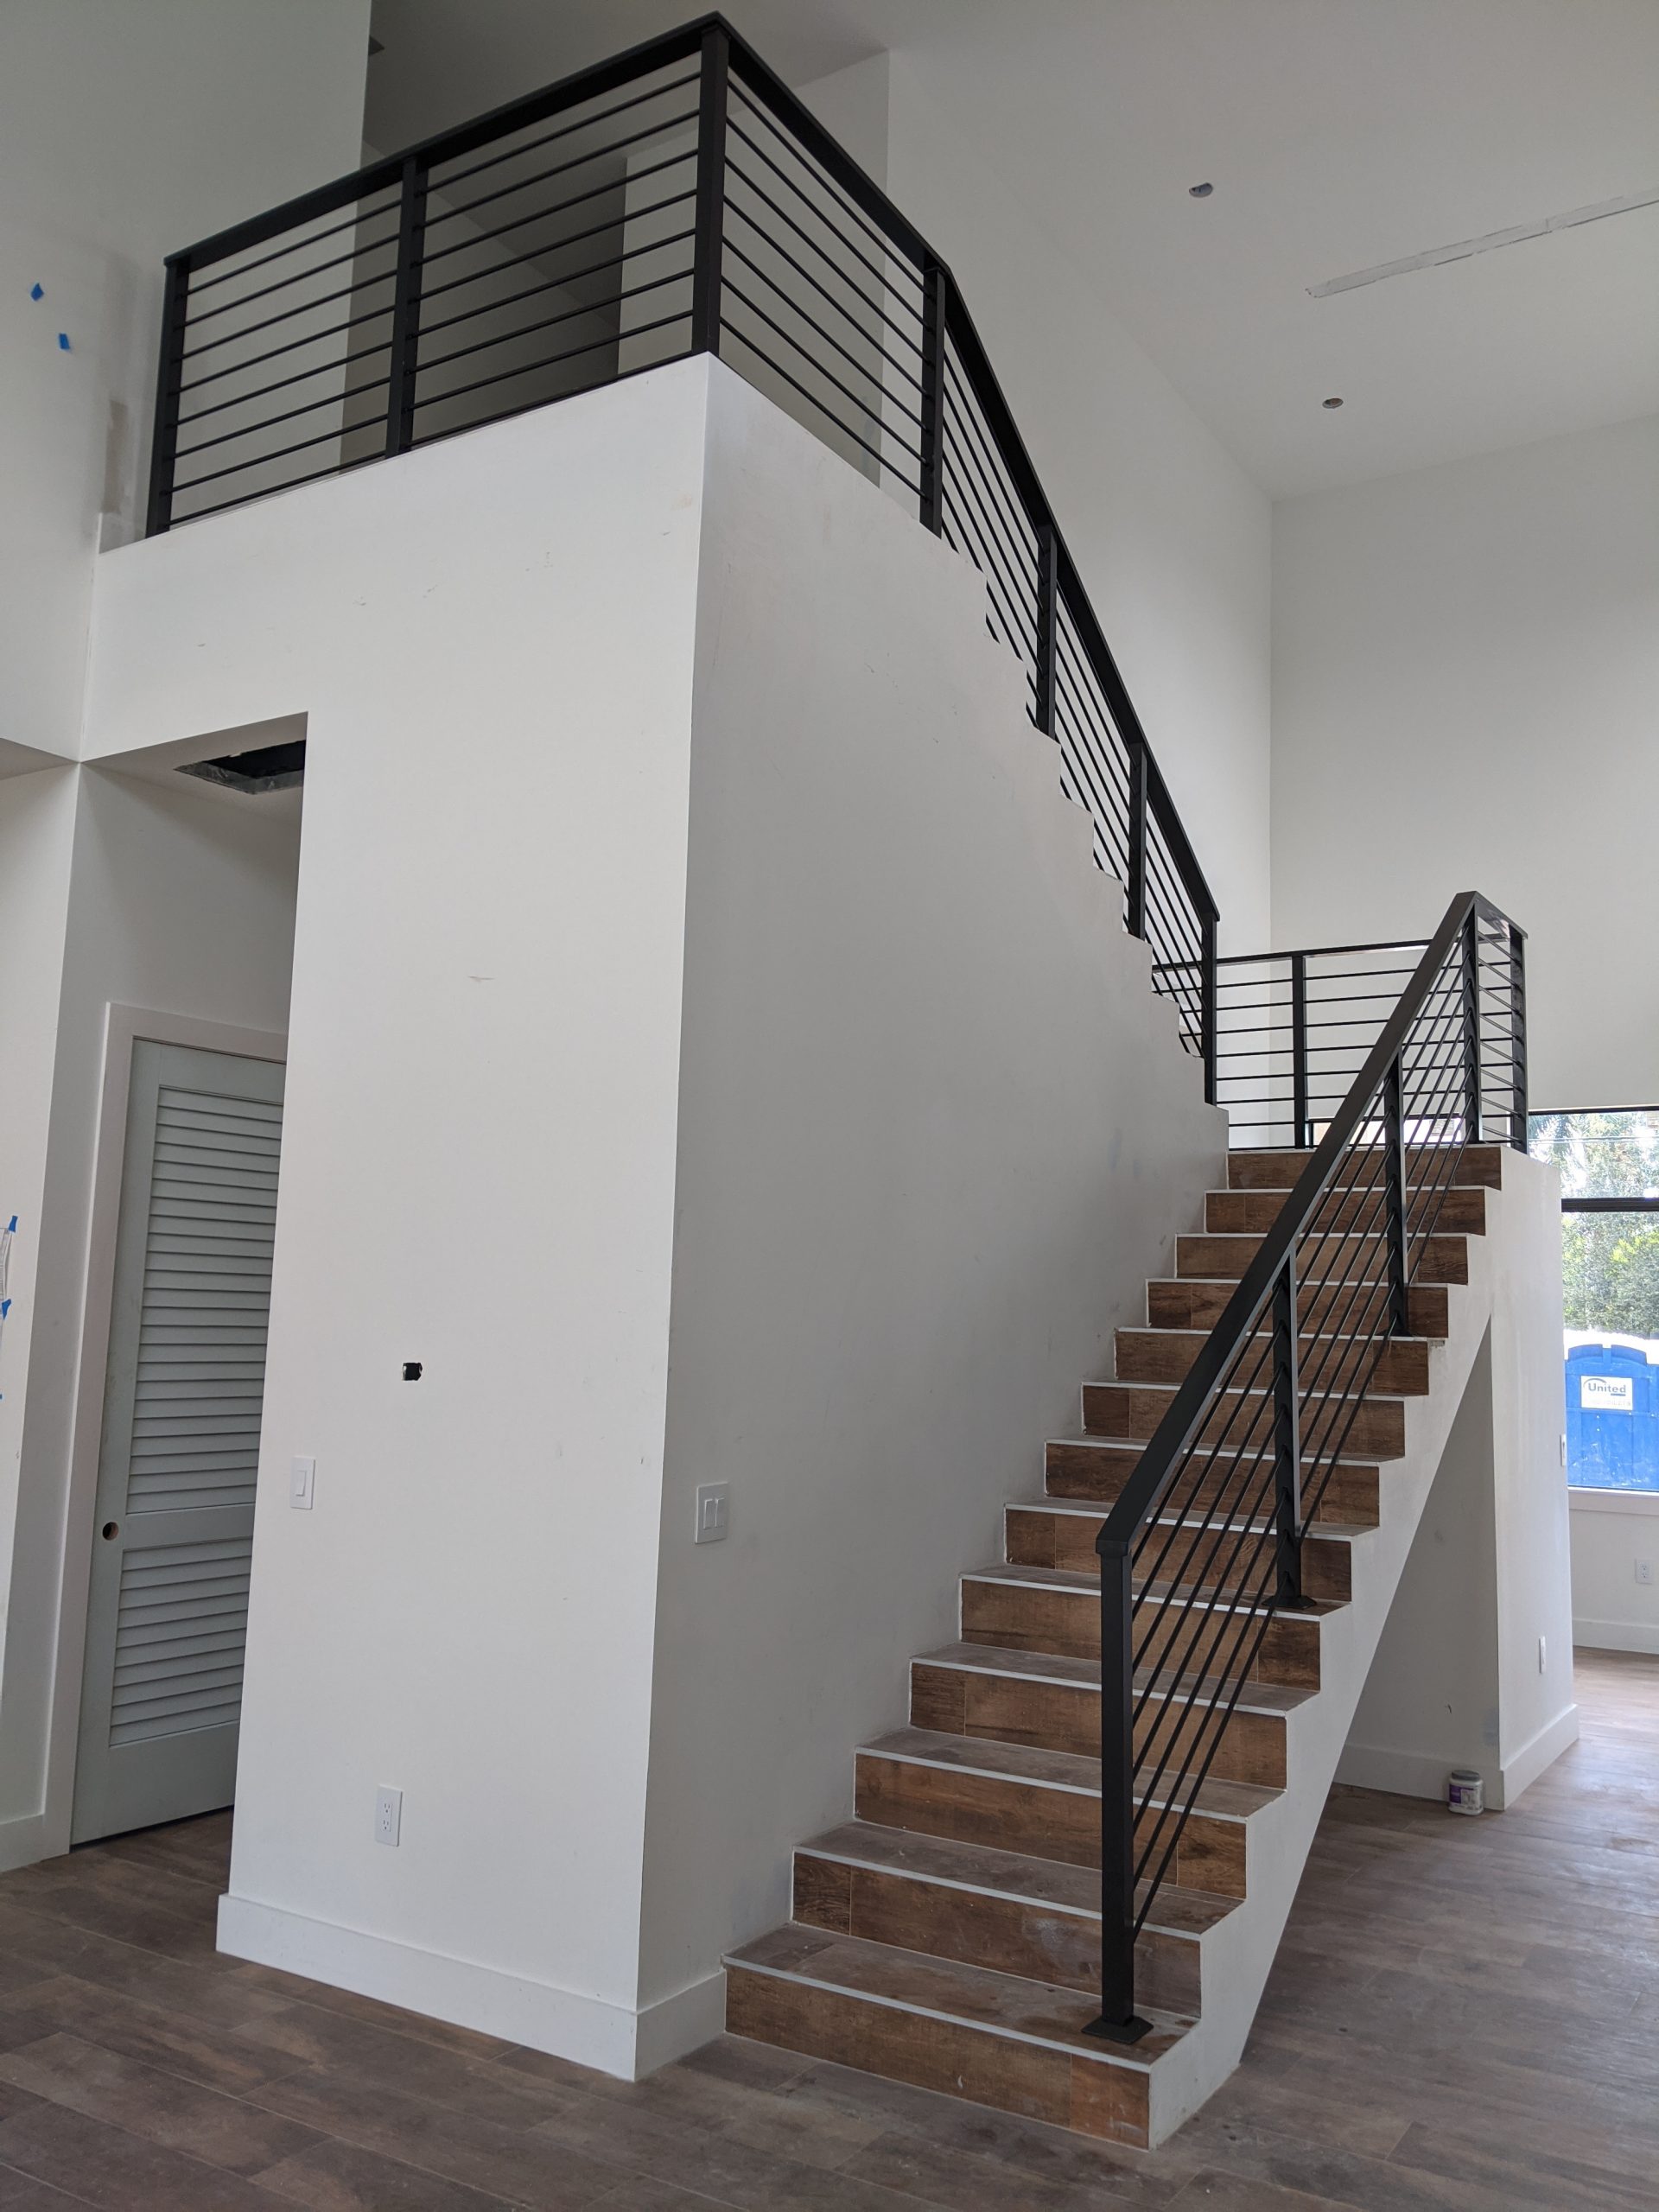 Residential Stair Railings 1 Scaled 